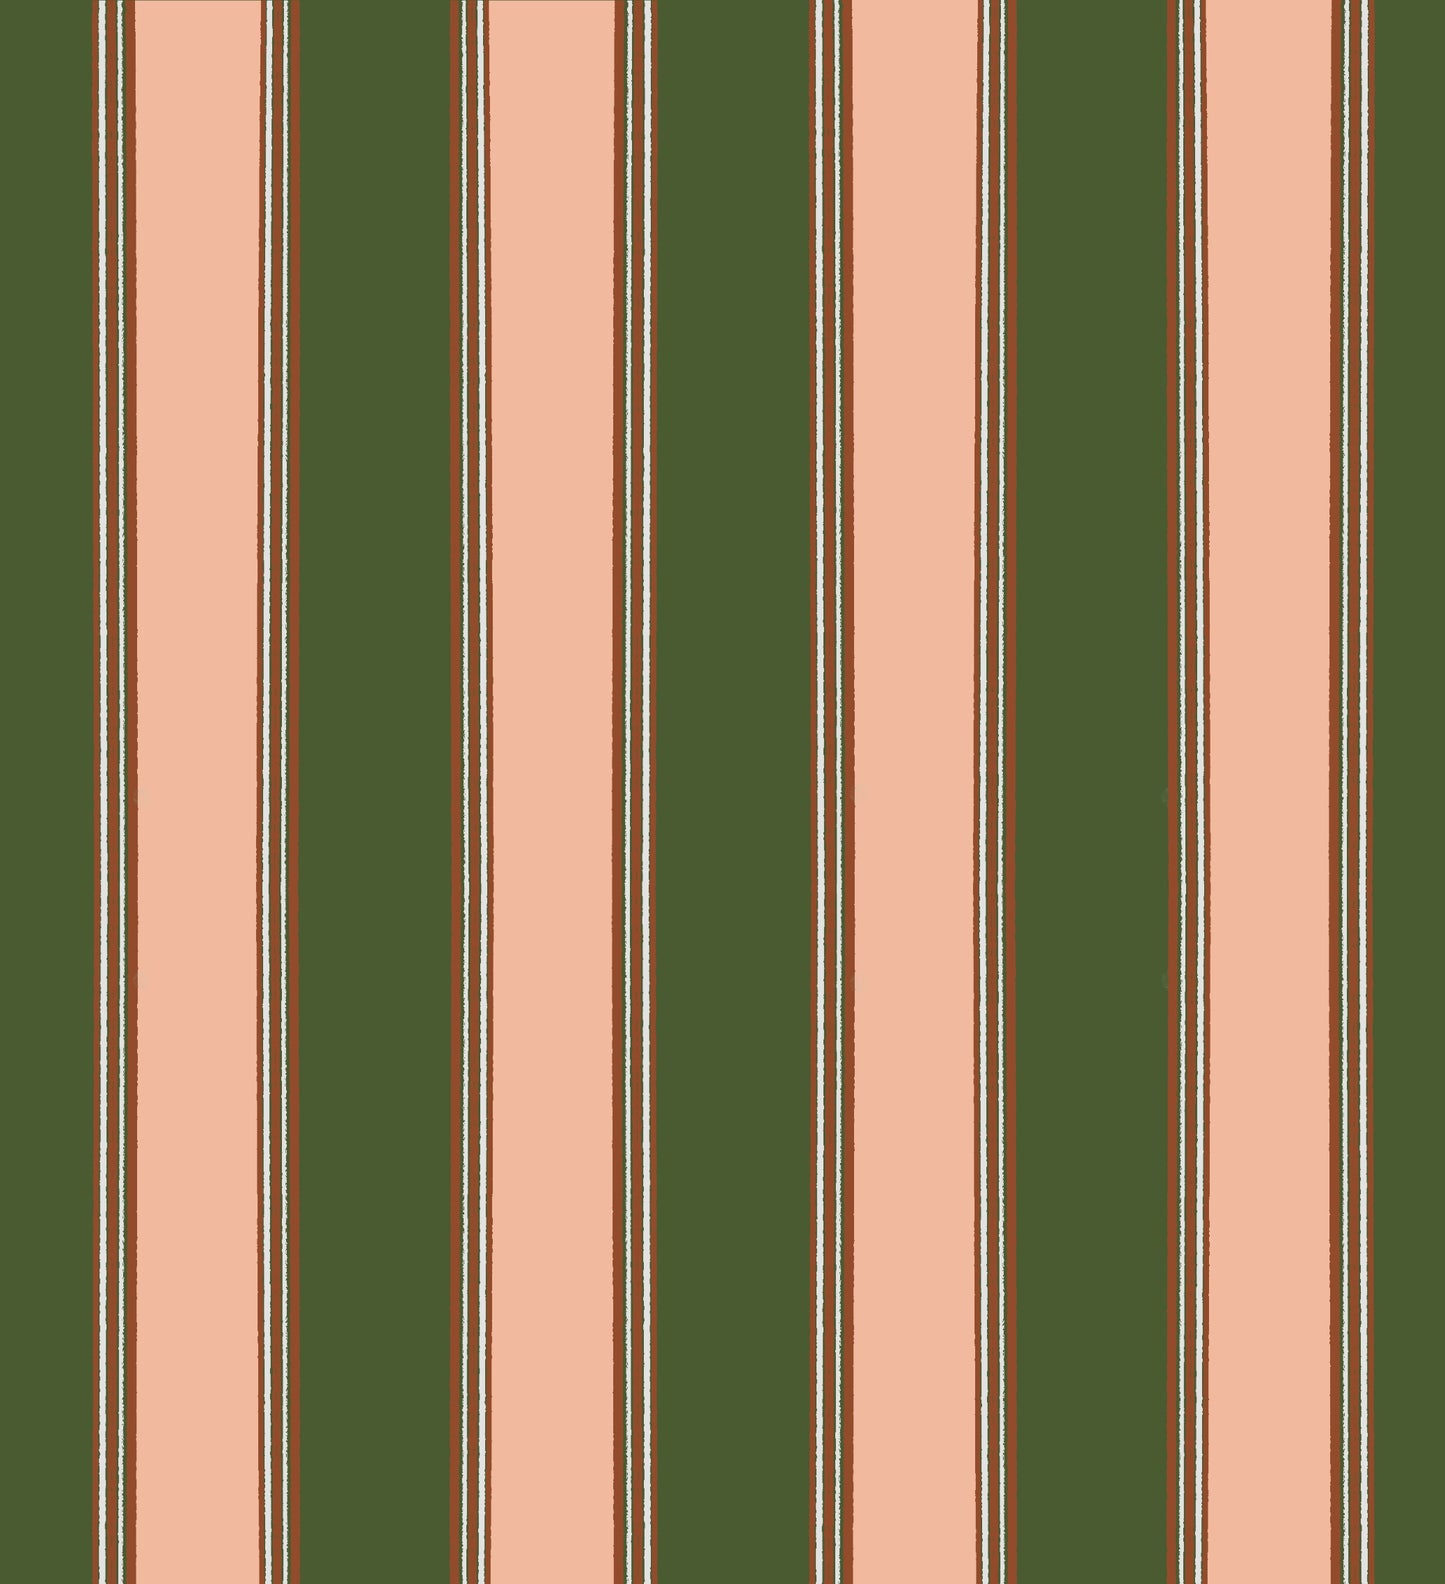 Mauve and Olive Stripe Fabric